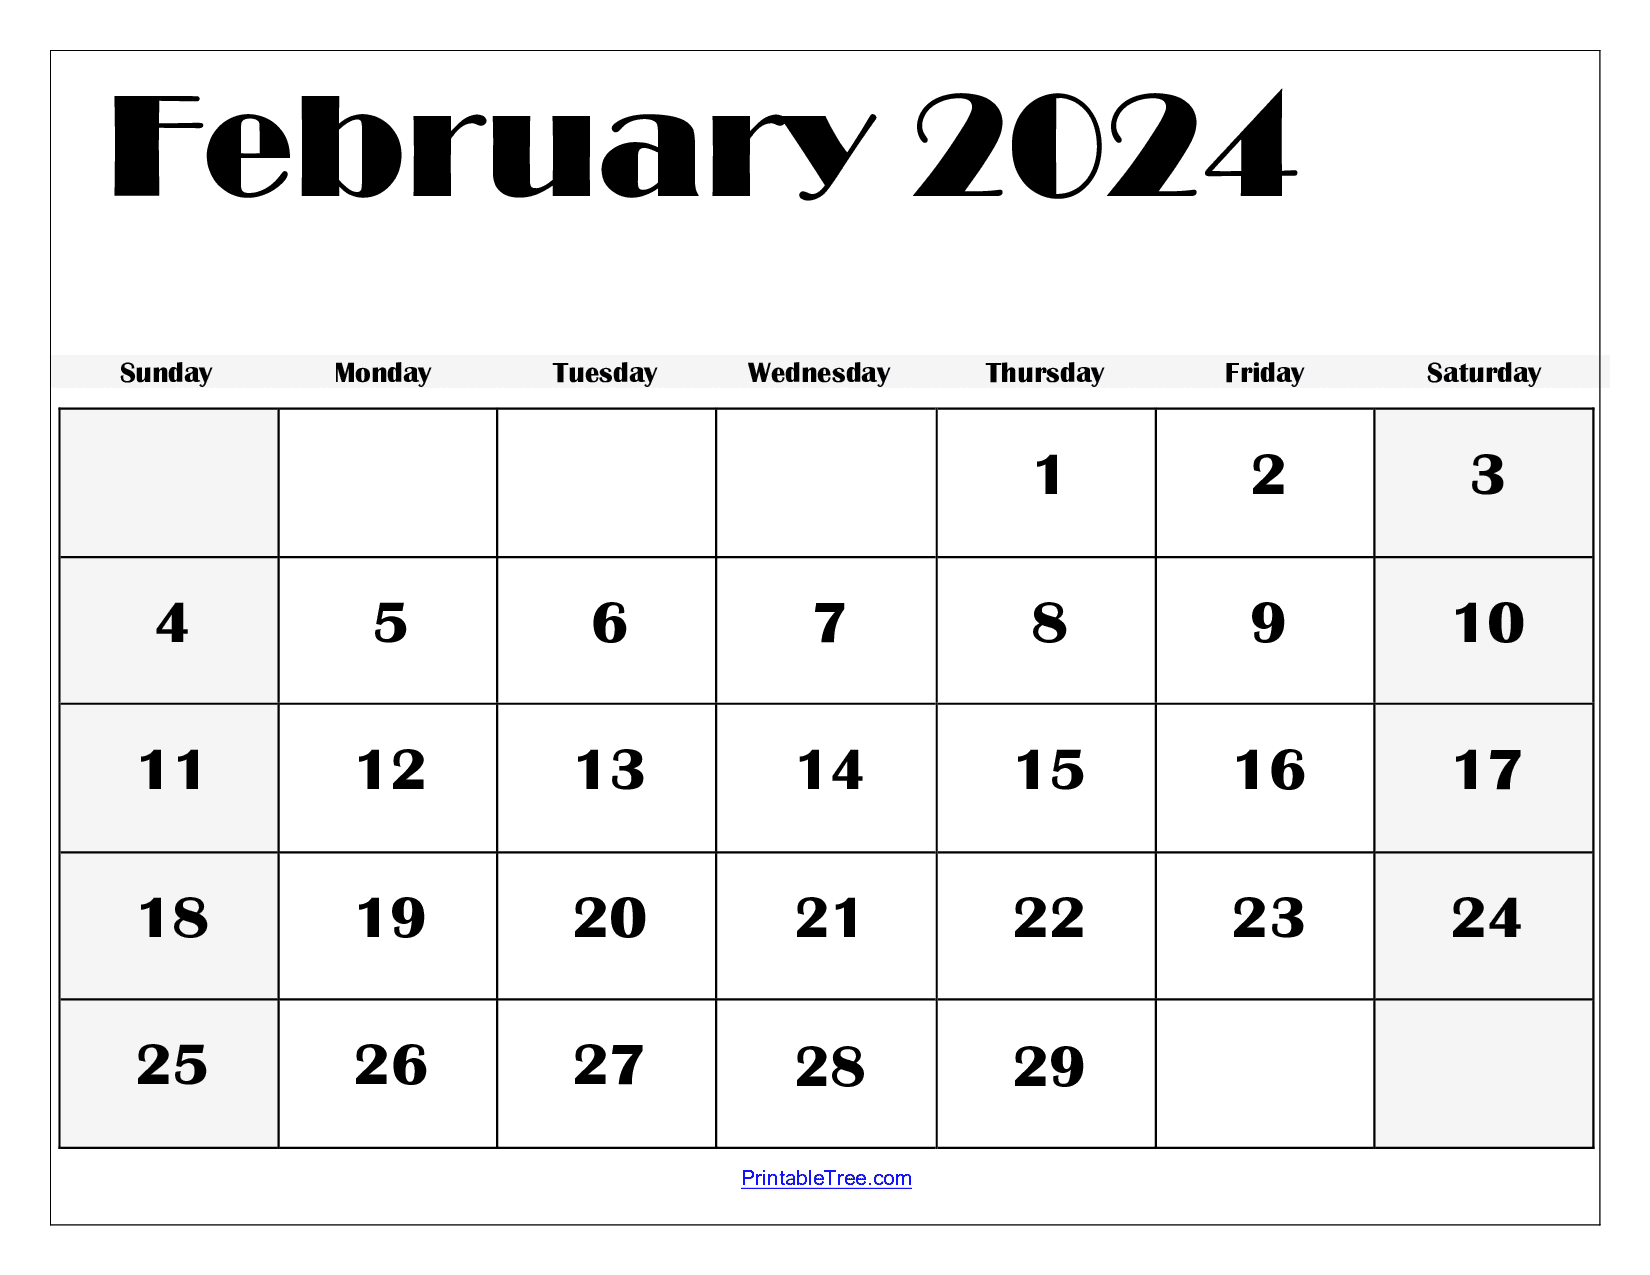 February 2024 Calendar Printable Pdf Template With Holidays for Printable Monthly Calendar Feb 2024